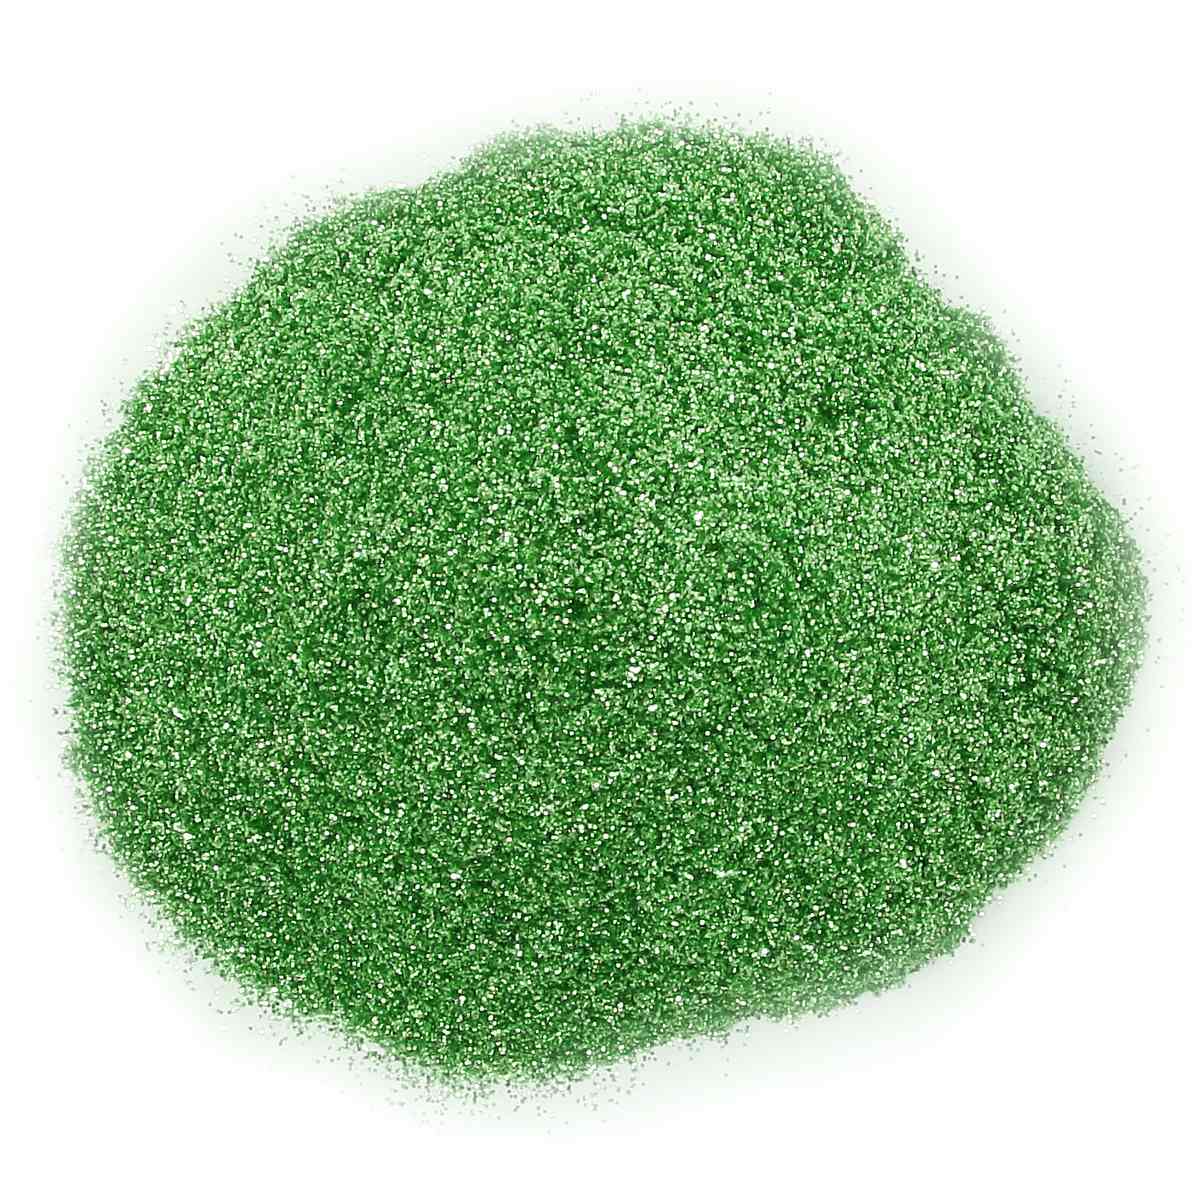 jags-mumbai Glitter Powder Jags Glitter Powder Neon Green 32 20gm